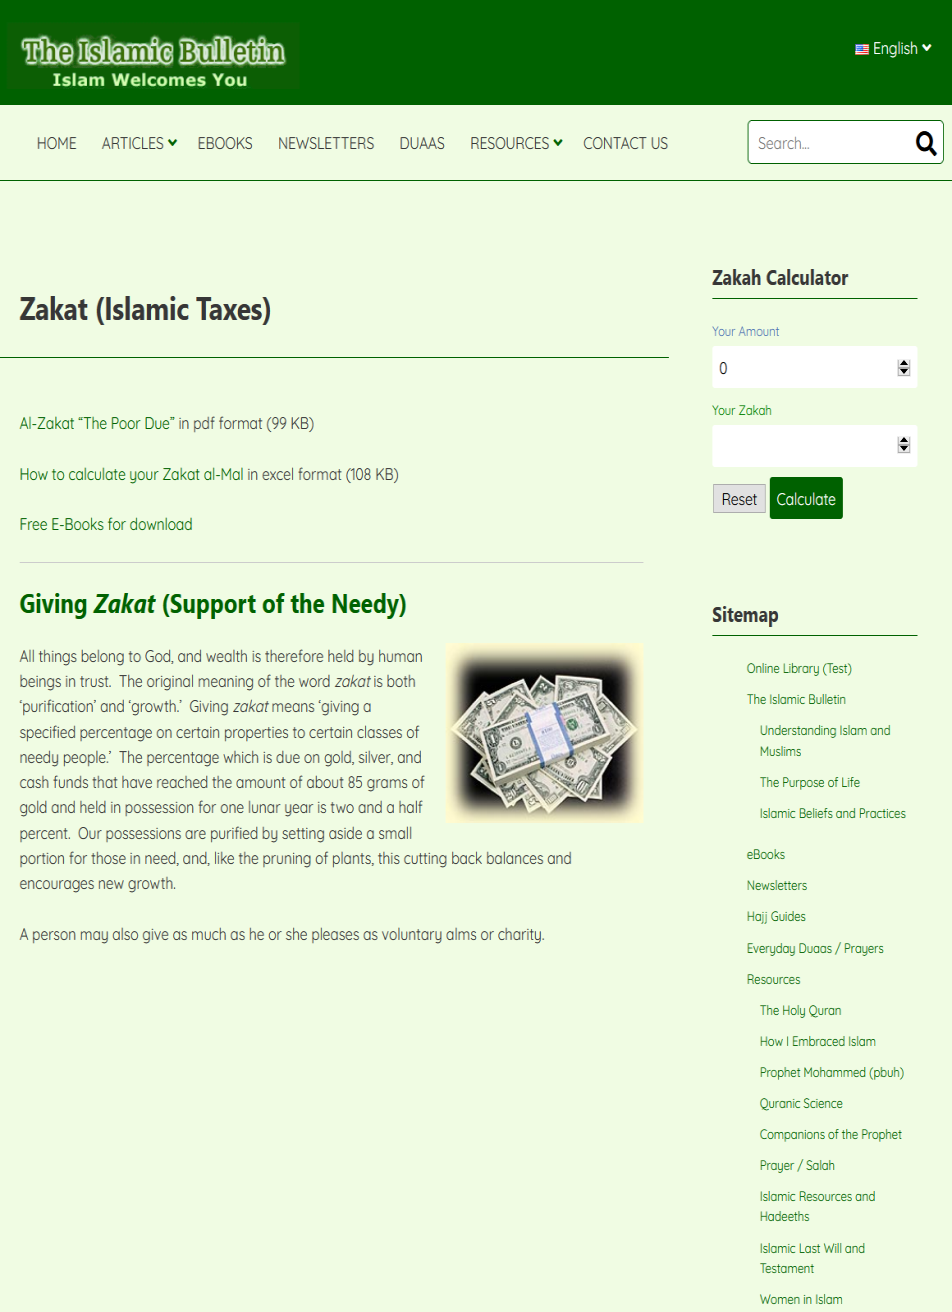 Zakat Resources - The Islamic Bulletin